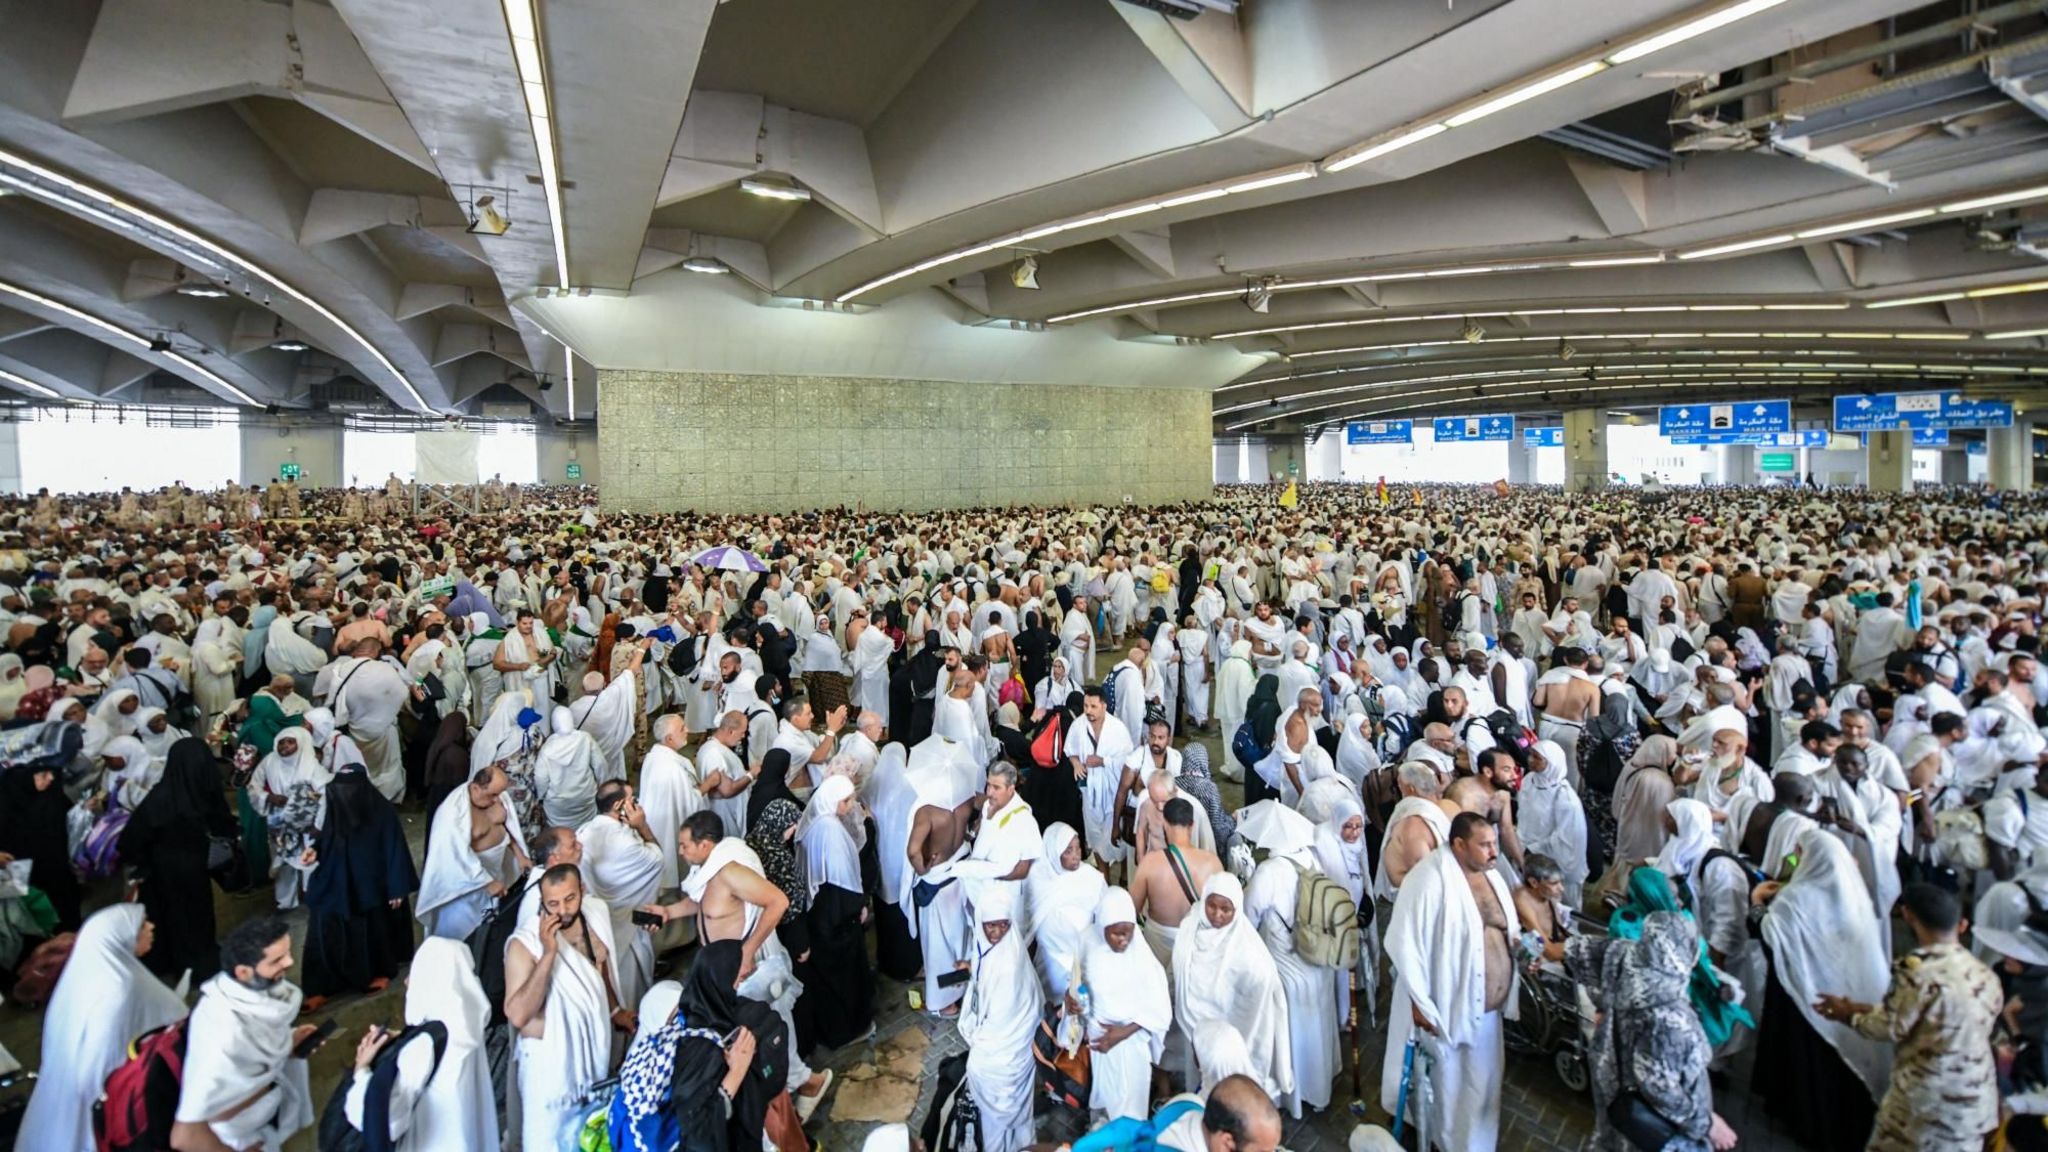  Pilgrims wearing white clothing near Mecca